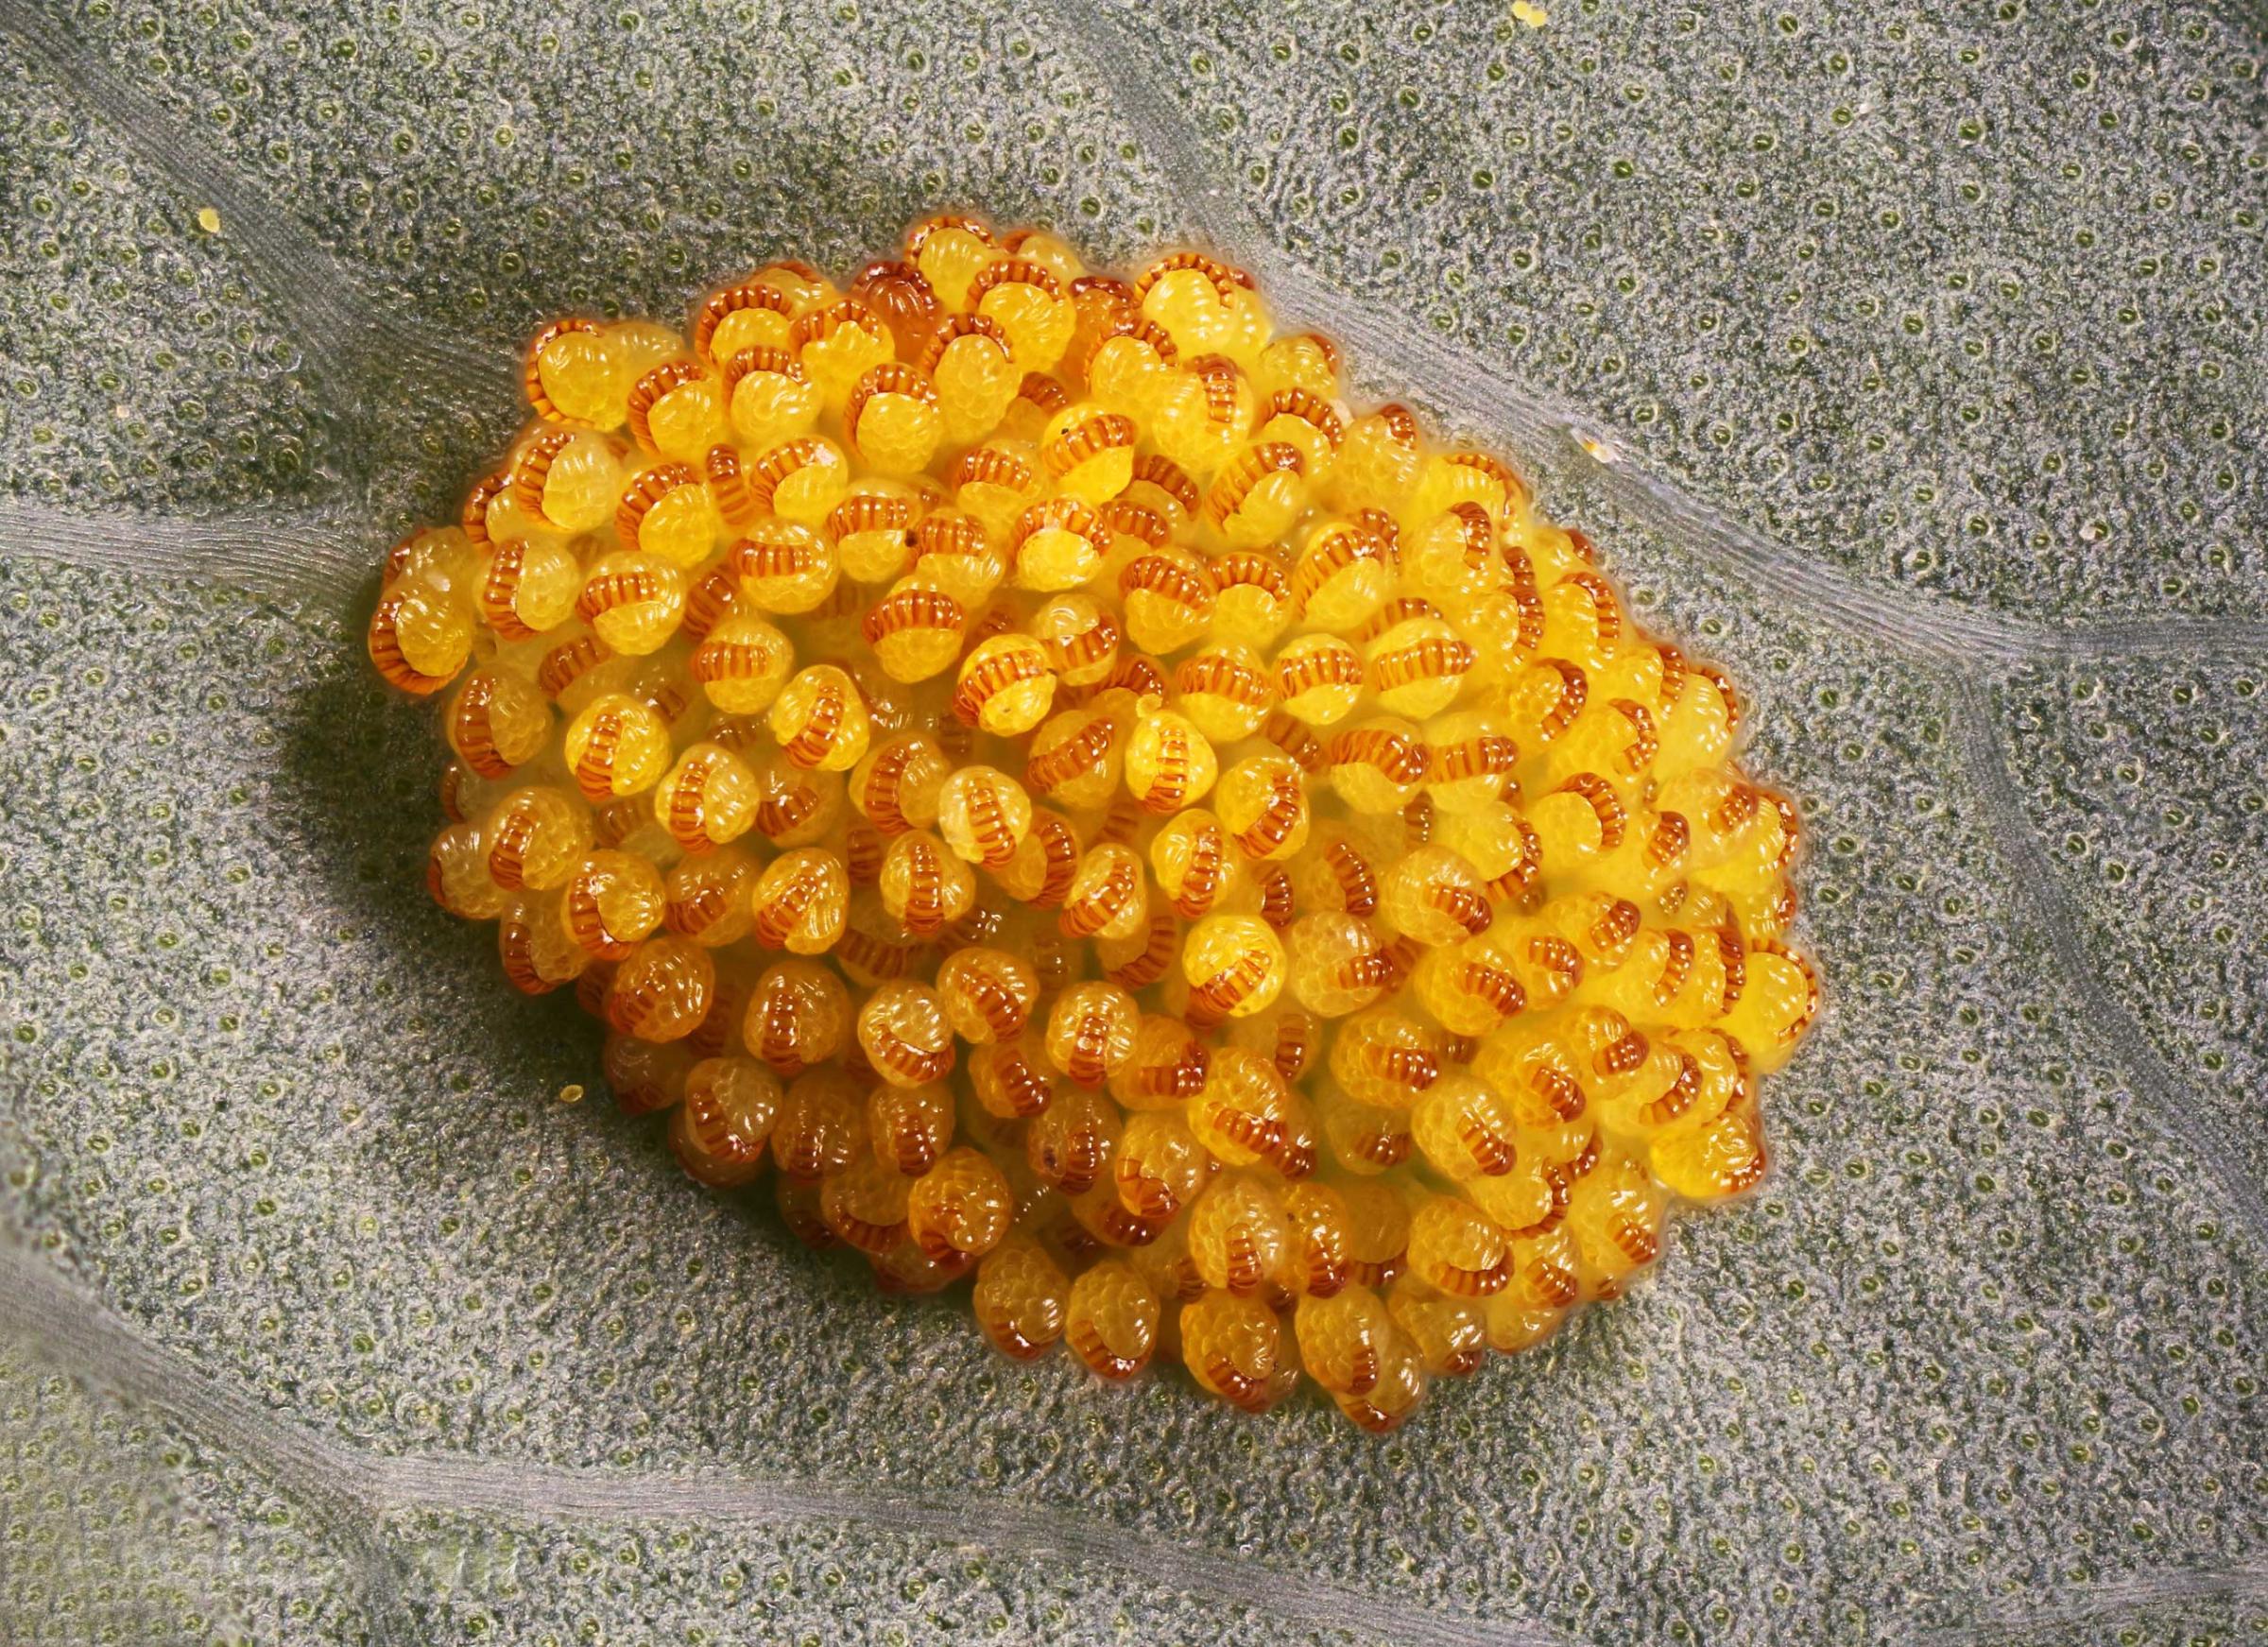 A spore cluster.